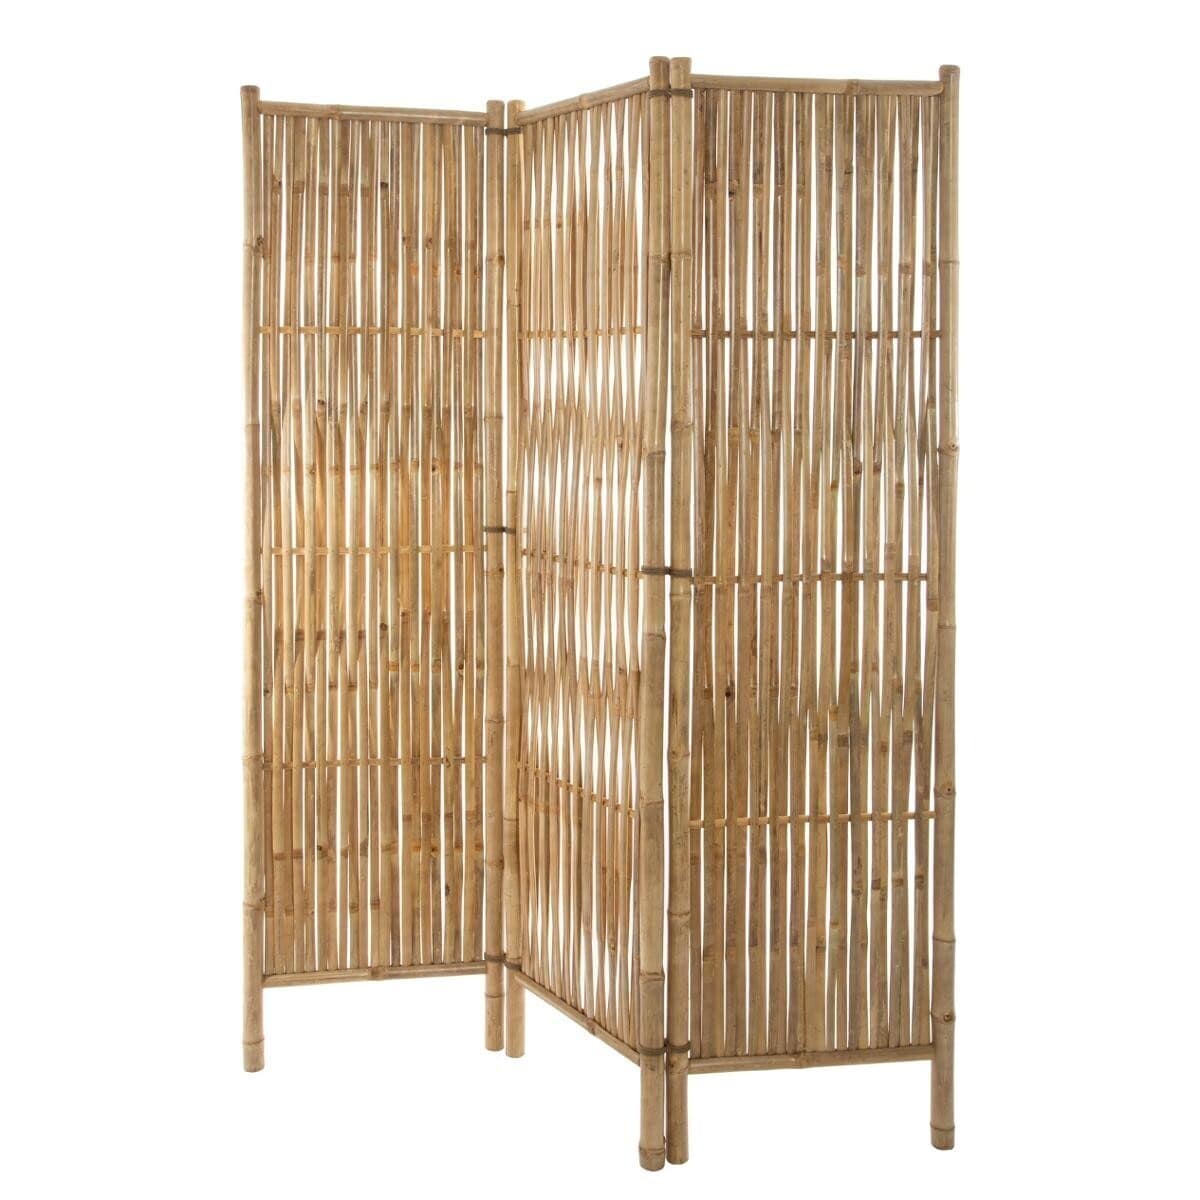 Biombo de Bambú - “DREAM”